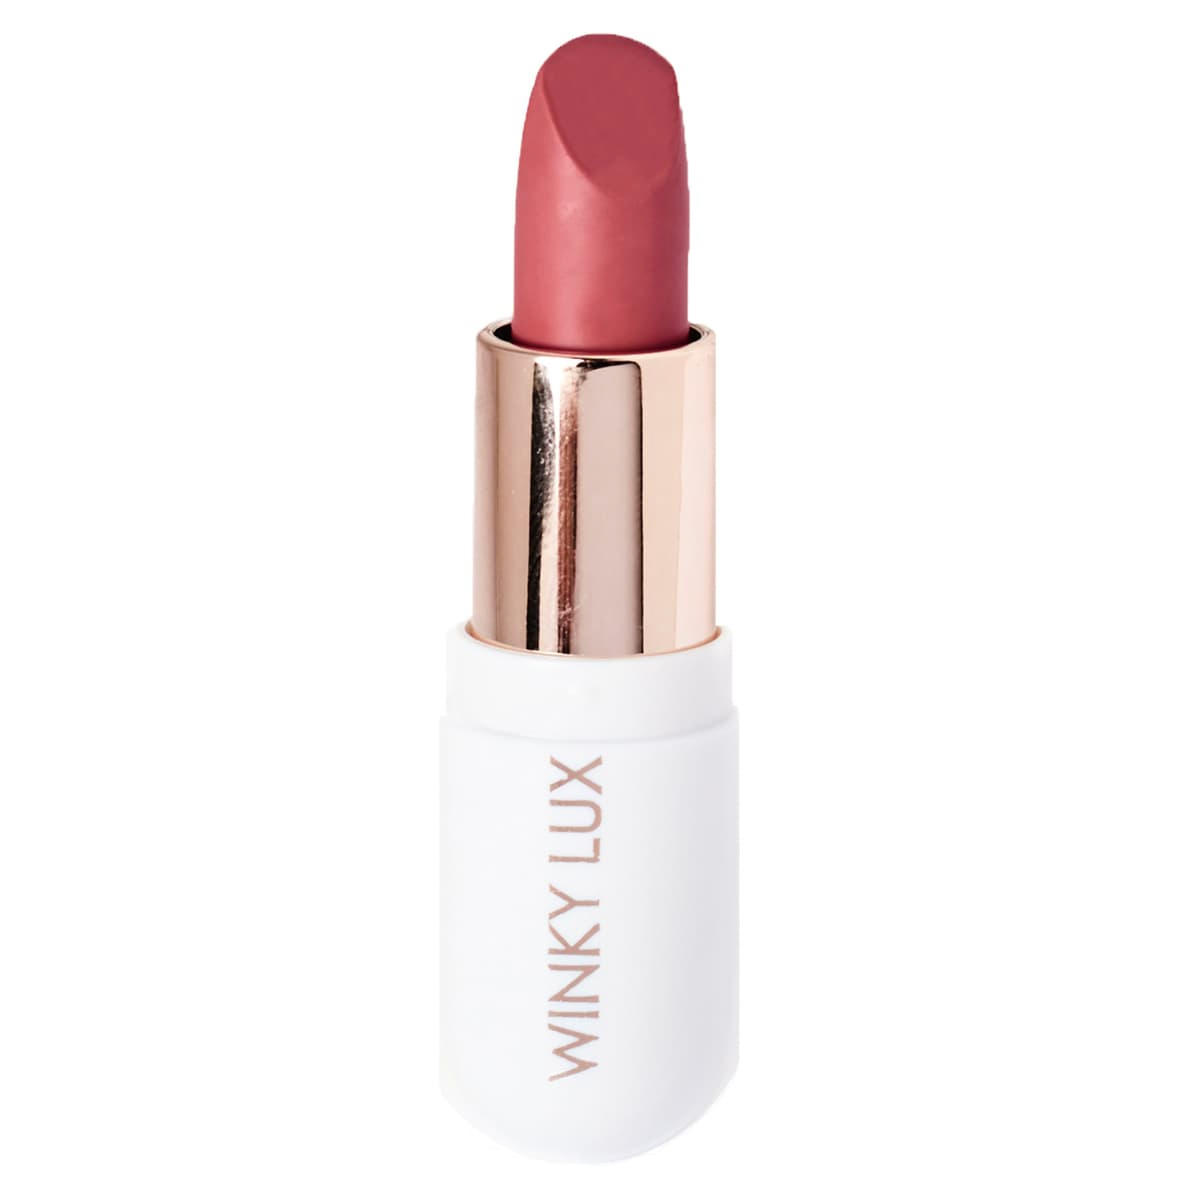 Winky Lux Creamy Dreamies Lipstick Creme